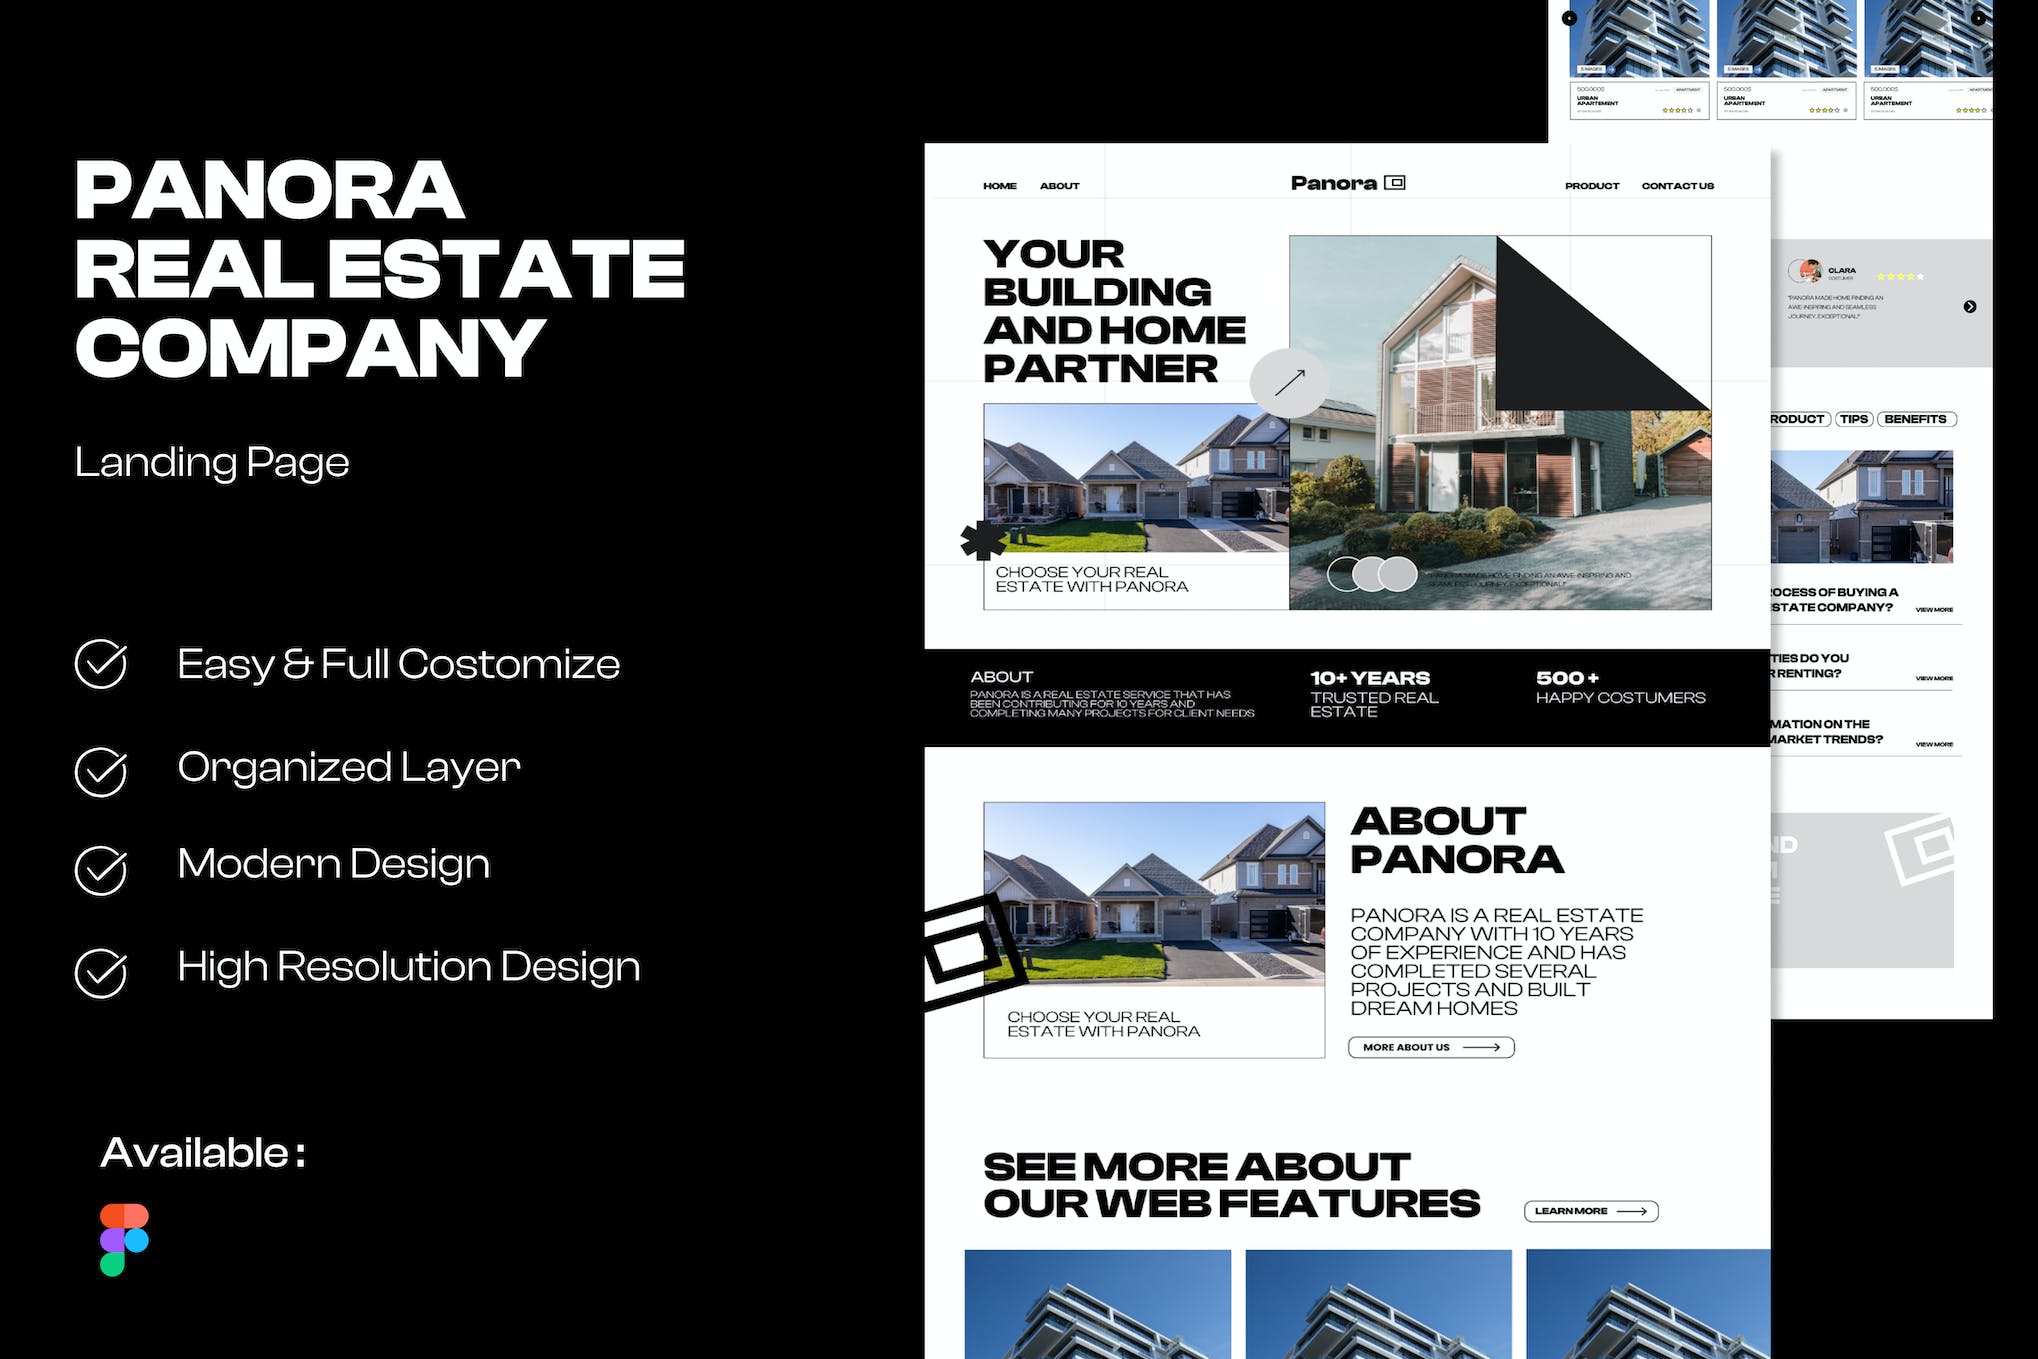 Panora - Real Estate Company Landing Page